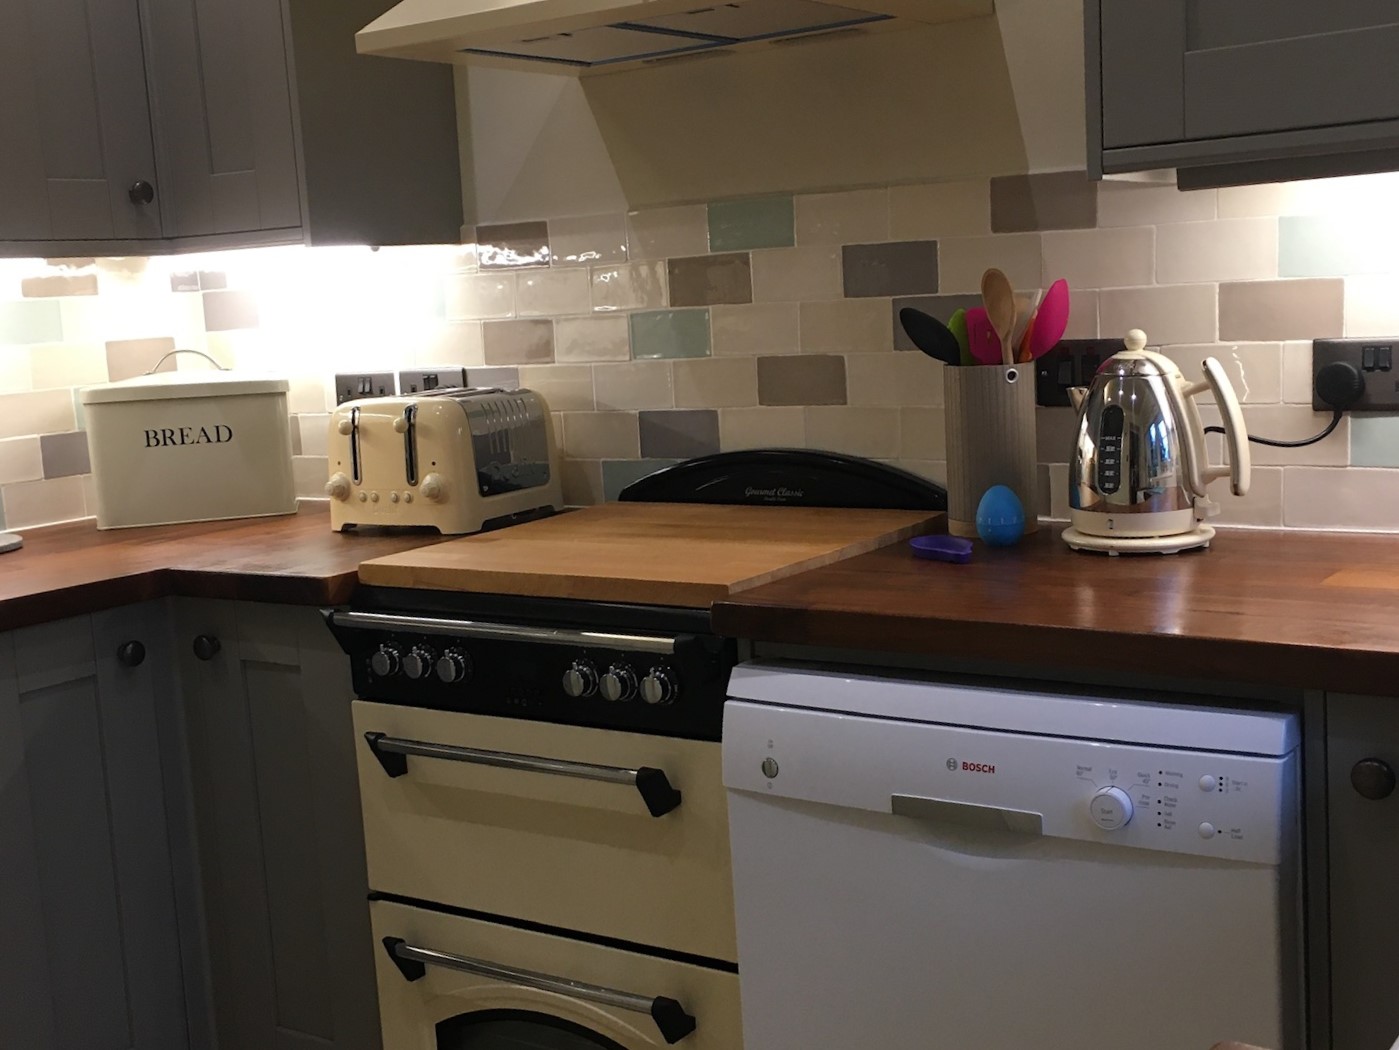 Dualit toaster and kettle in kitchen in 9 Melinda Cottage East Runton @NorfolkCoastline